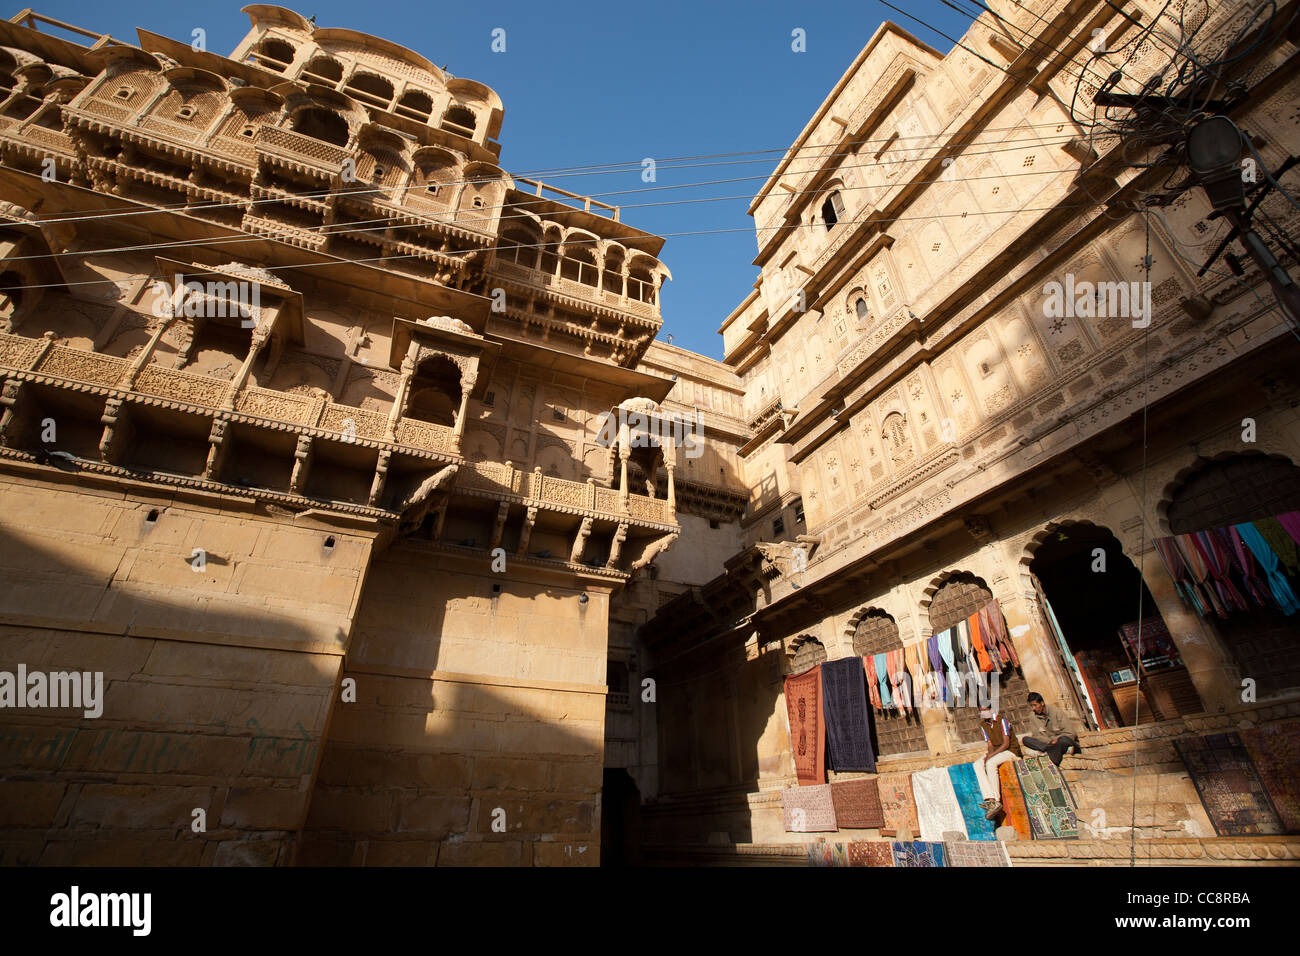 Le Fort Palace et Dashera Chowk, dans Fort de Jaisalmer, dans le Rajasthan, Inde Banque D'Images